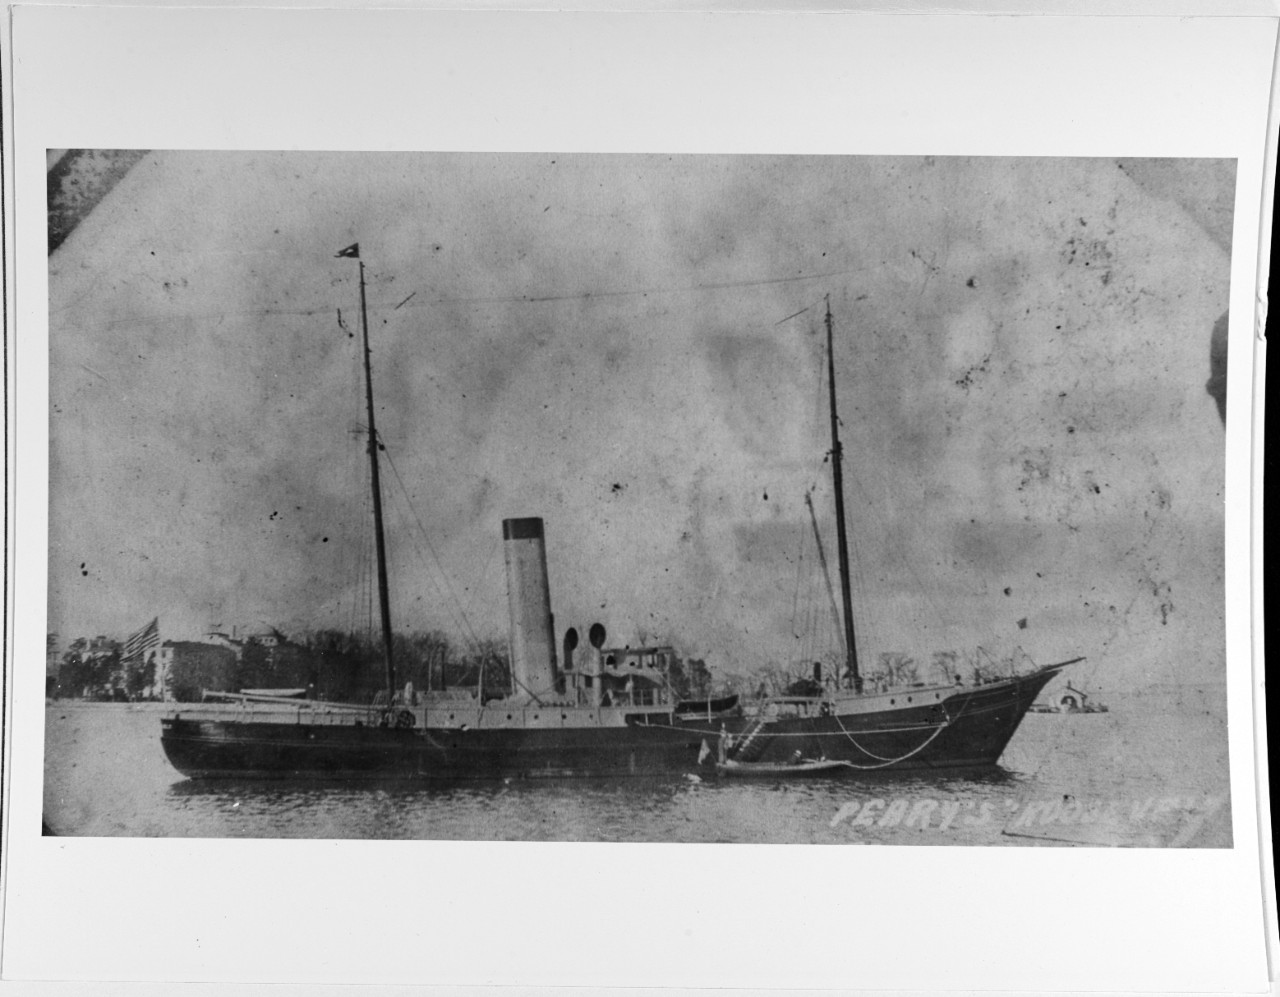 Robert E. Peary's Yacht